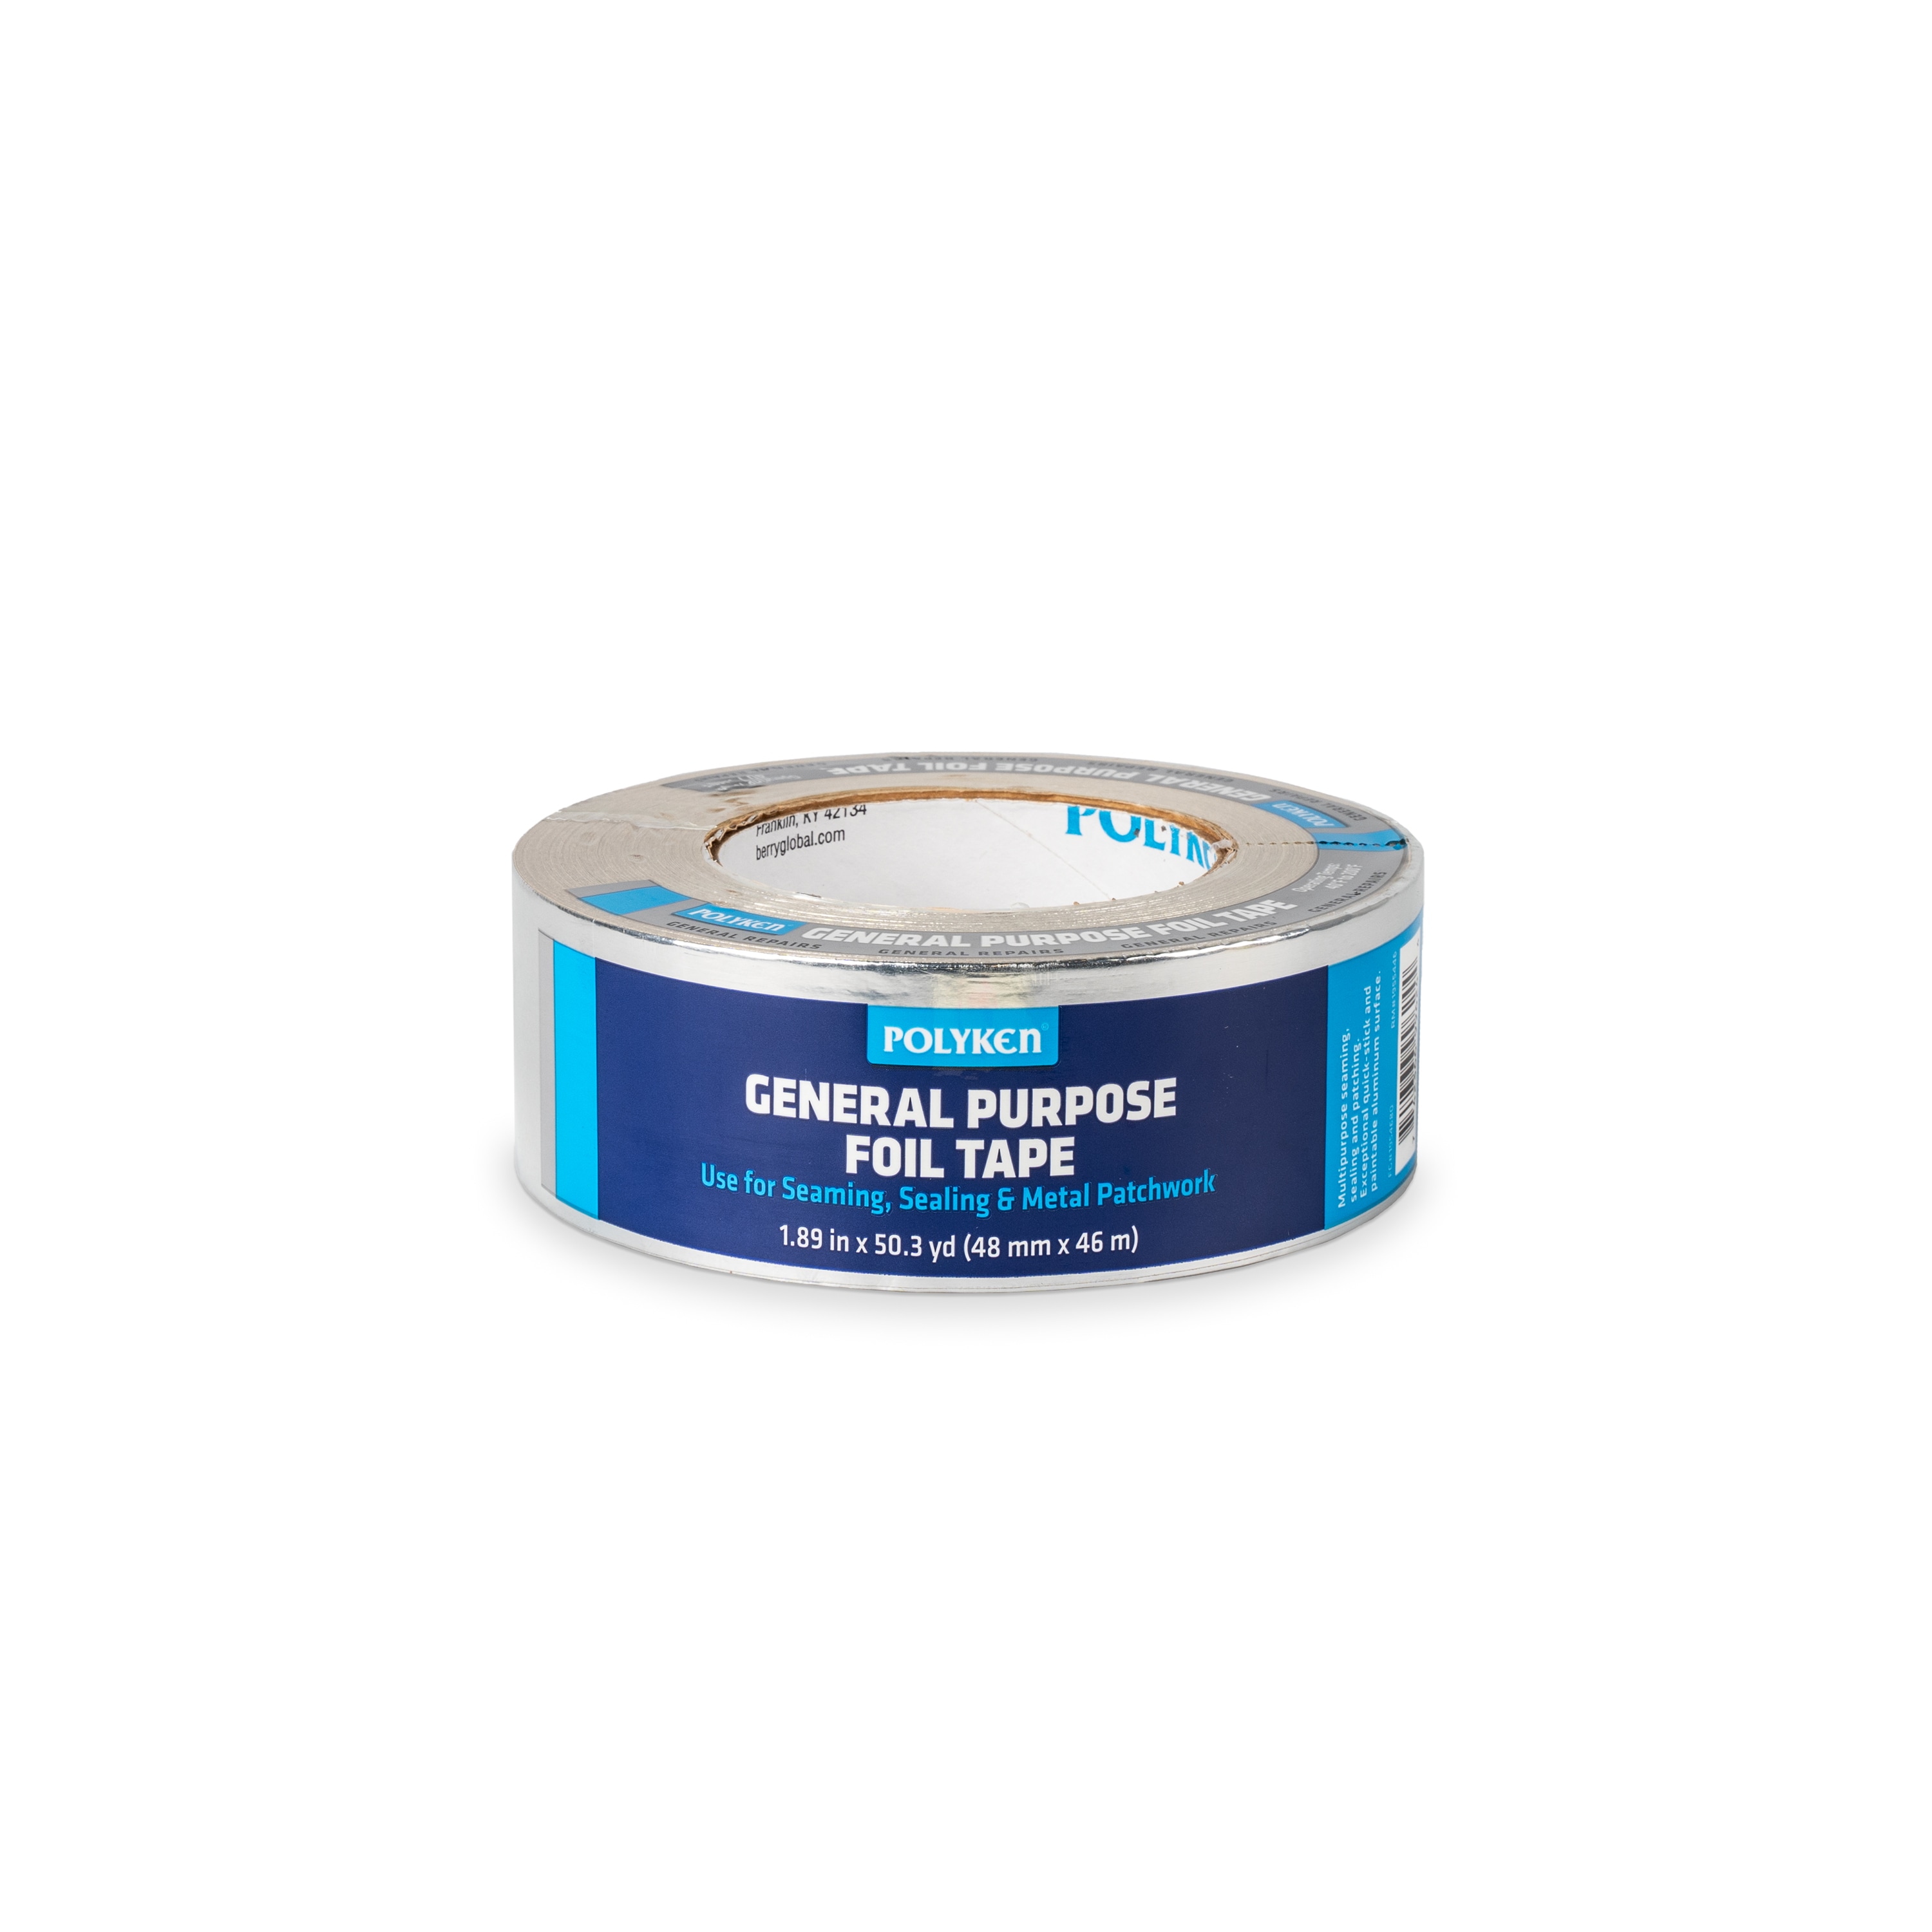 PET Tape - PET Tape, Double Side Tape, Detape, High-Quality Vinyl (PVC)  Films and Sheets Manufacturer